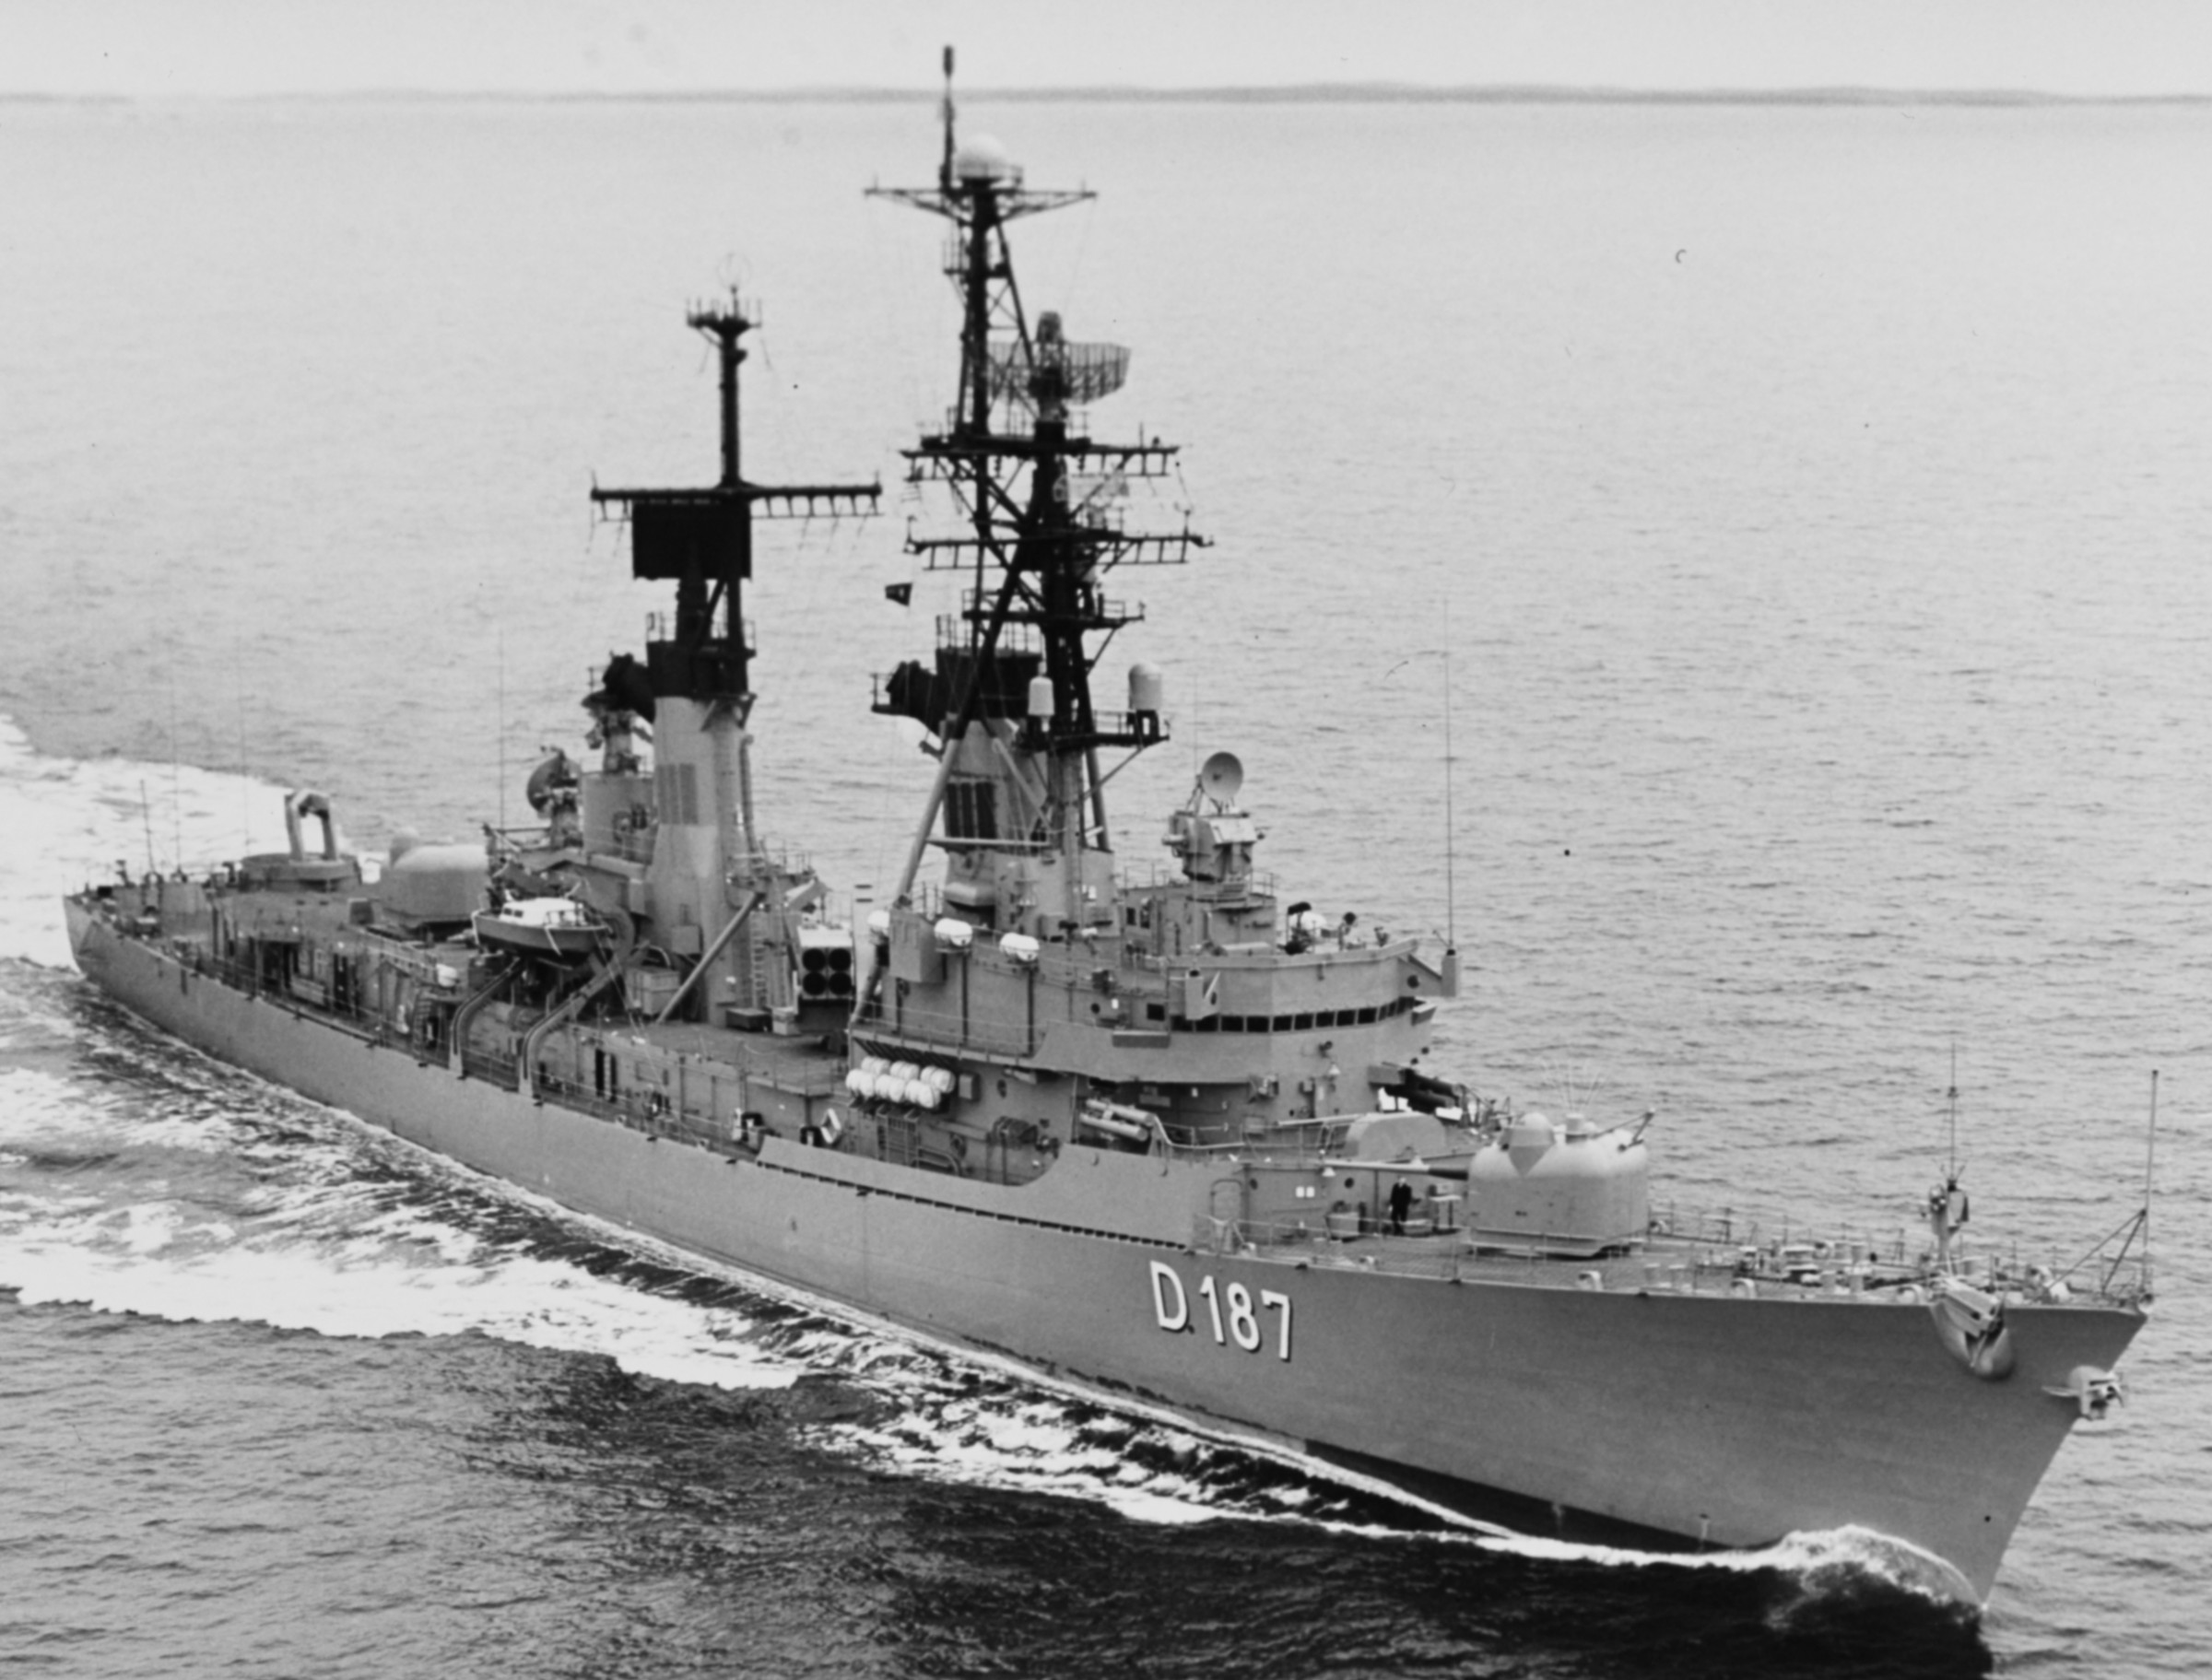 type 103 lütjens class guided missile destroyer ddg german navy d-187 fgs rommel deutsche marine